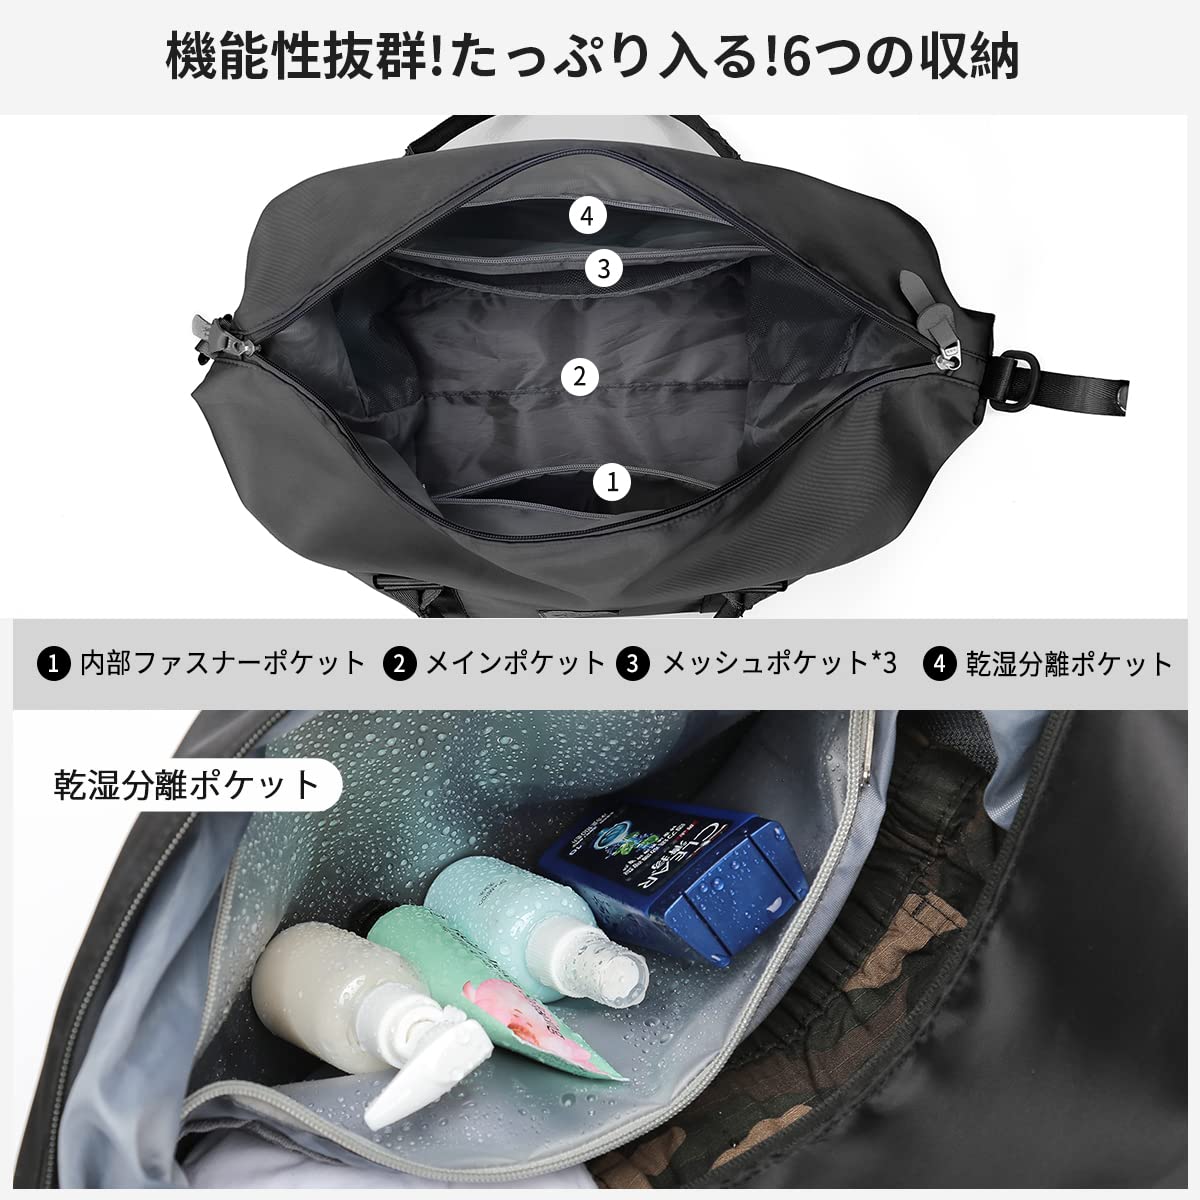 Zingaro Commando Multicolor Backpack With 35 Features